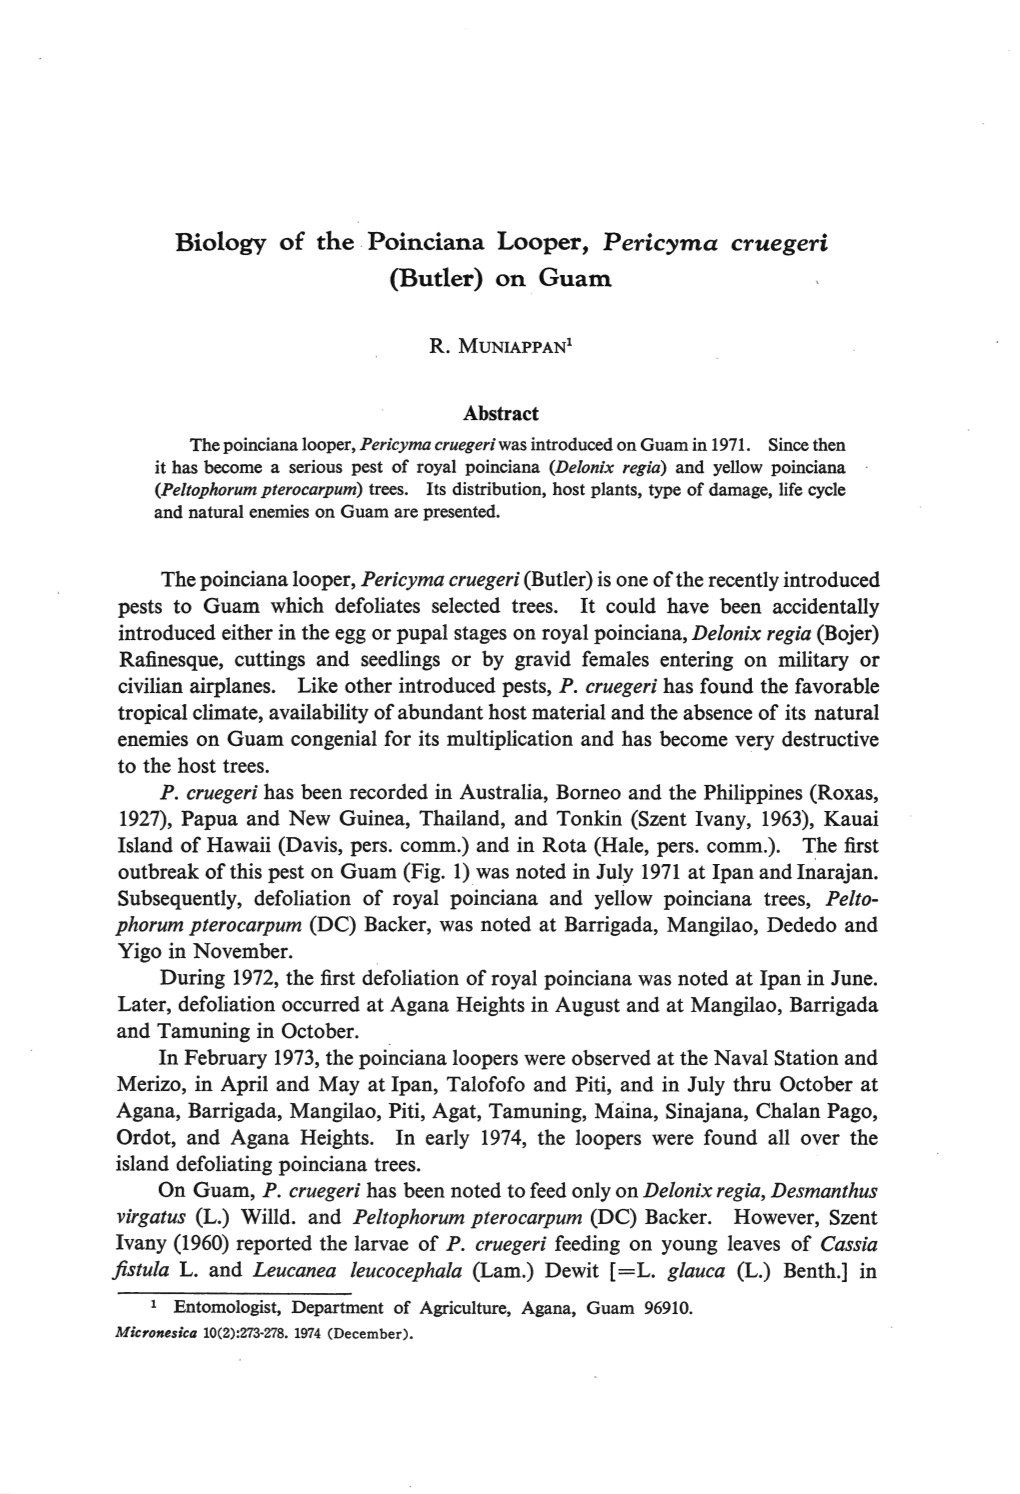 Biology of the Poinciana Looper, Pericyma Cruegeri (Butler) on Guam